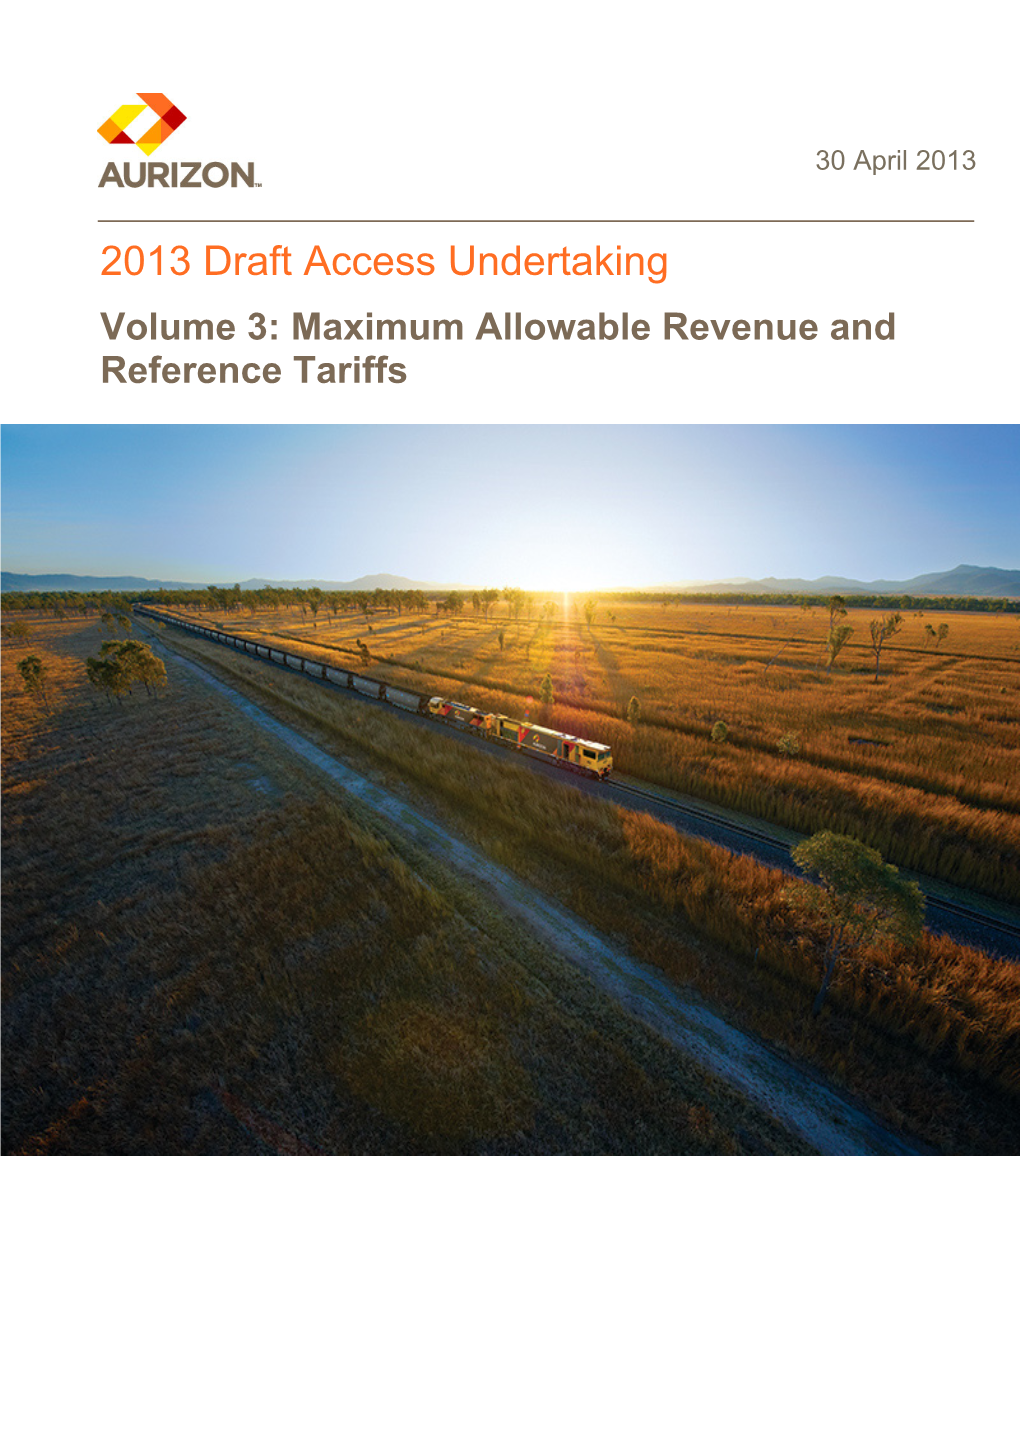 2013 Draft Access Undertaking Volume 3: Maximum Allowable Revenue and Reference Tariffs